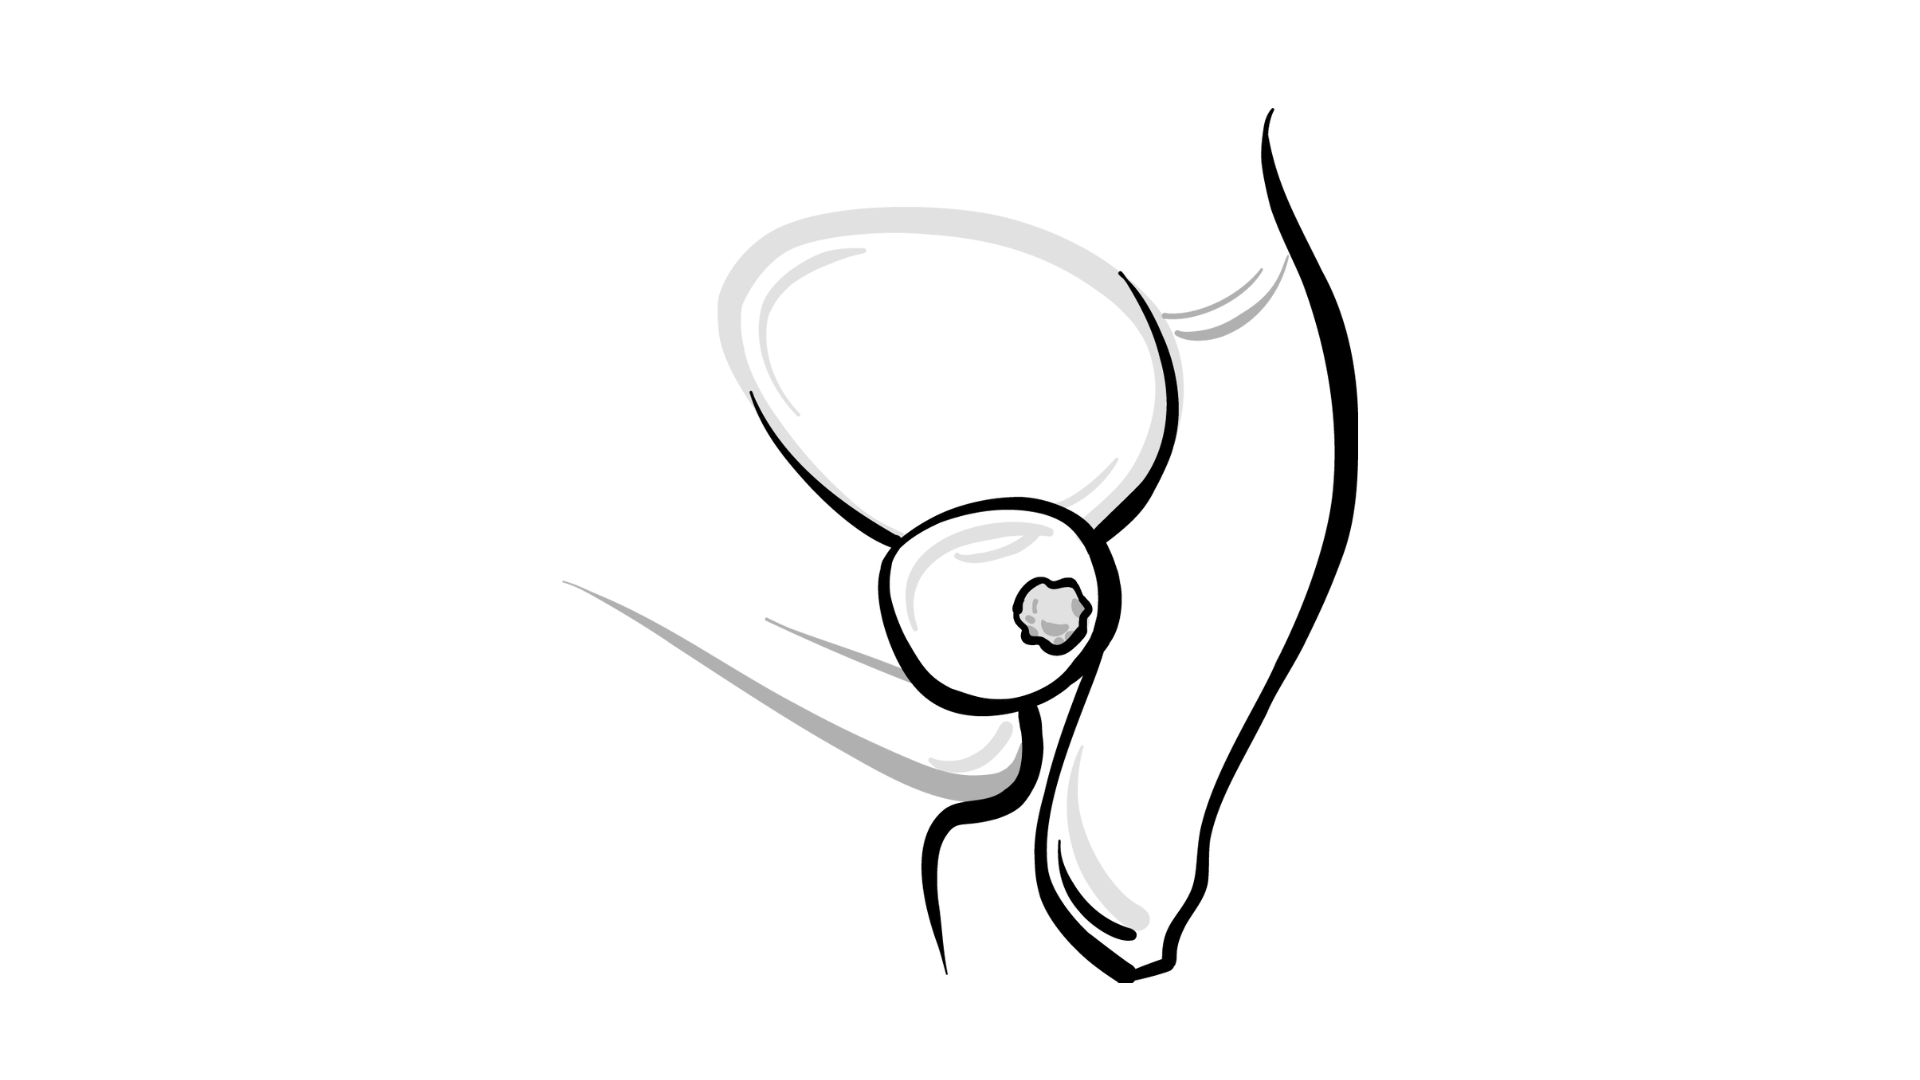 Sketch of prostate